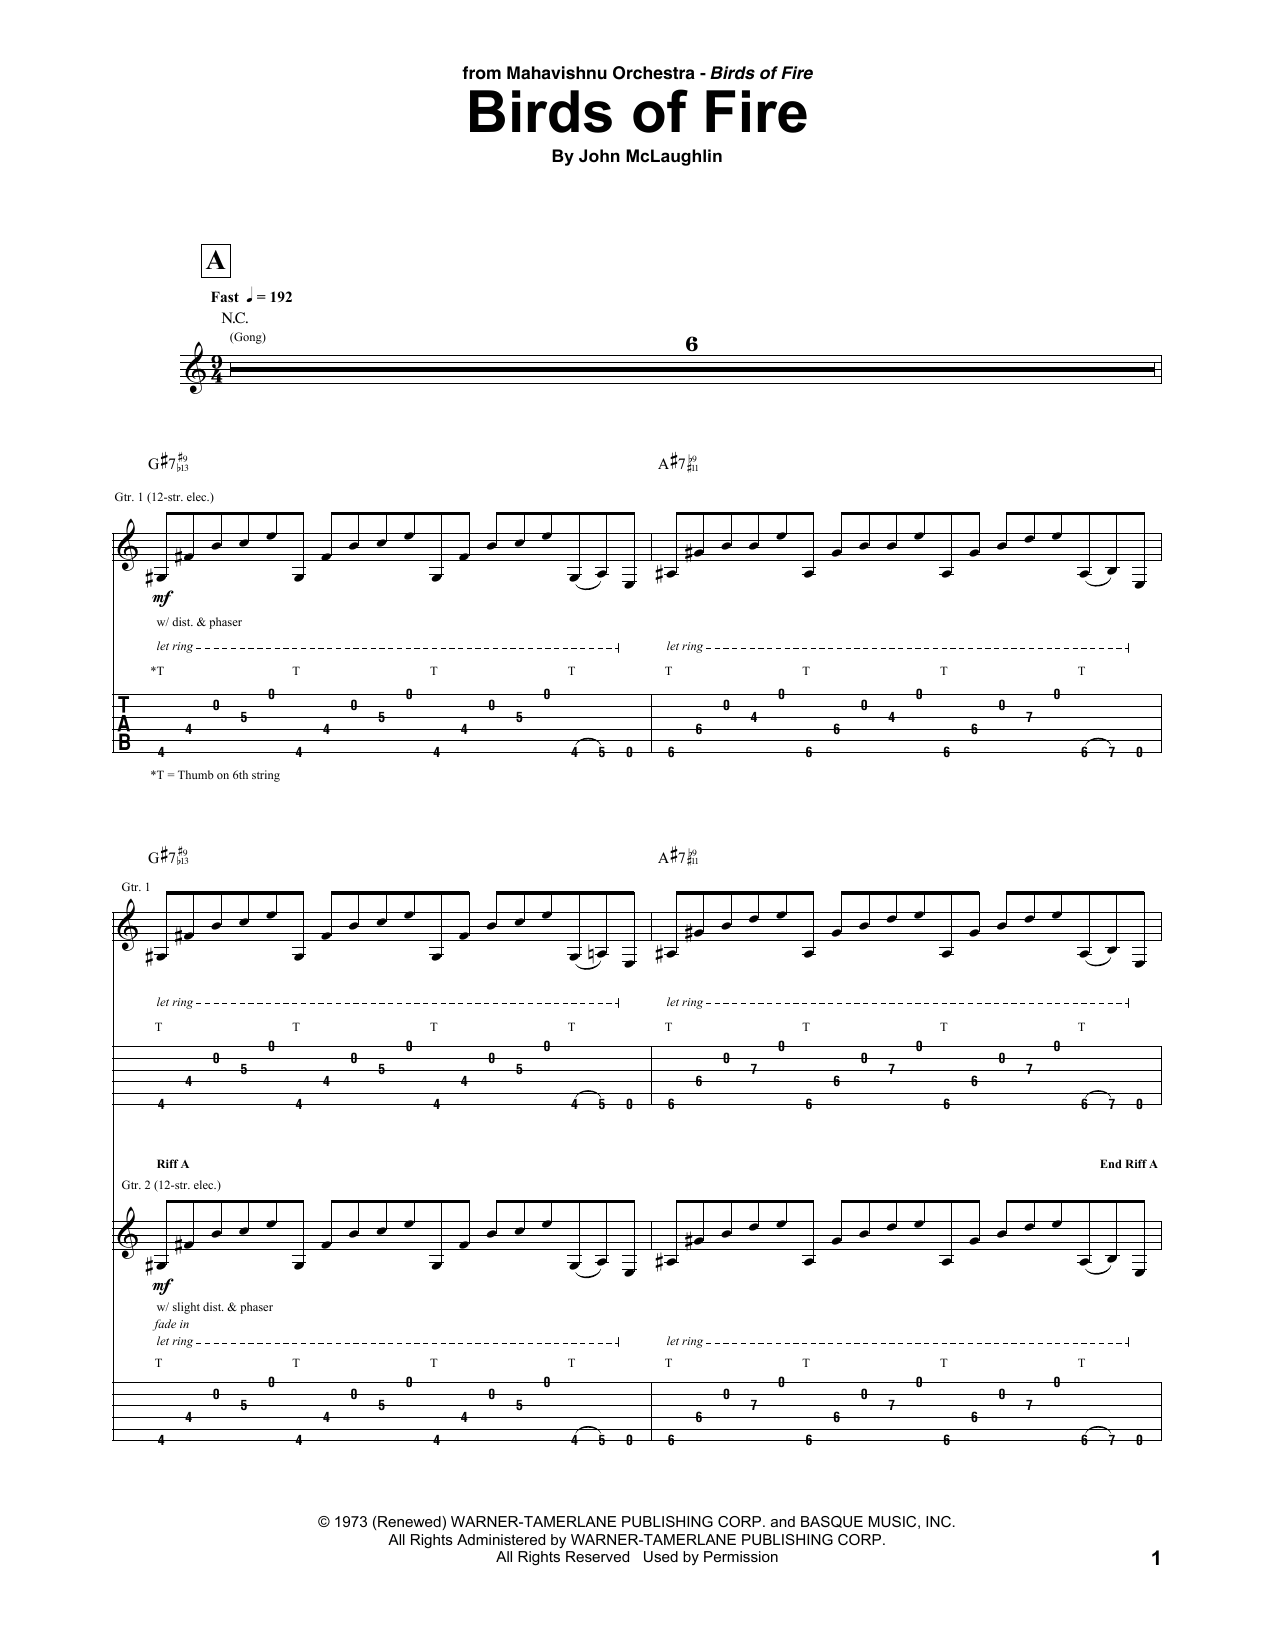 Mahavishnu Orchestra Birds Of Fire Sheet Music Notes & Chords for Guitar Tab - Download or Print PDF